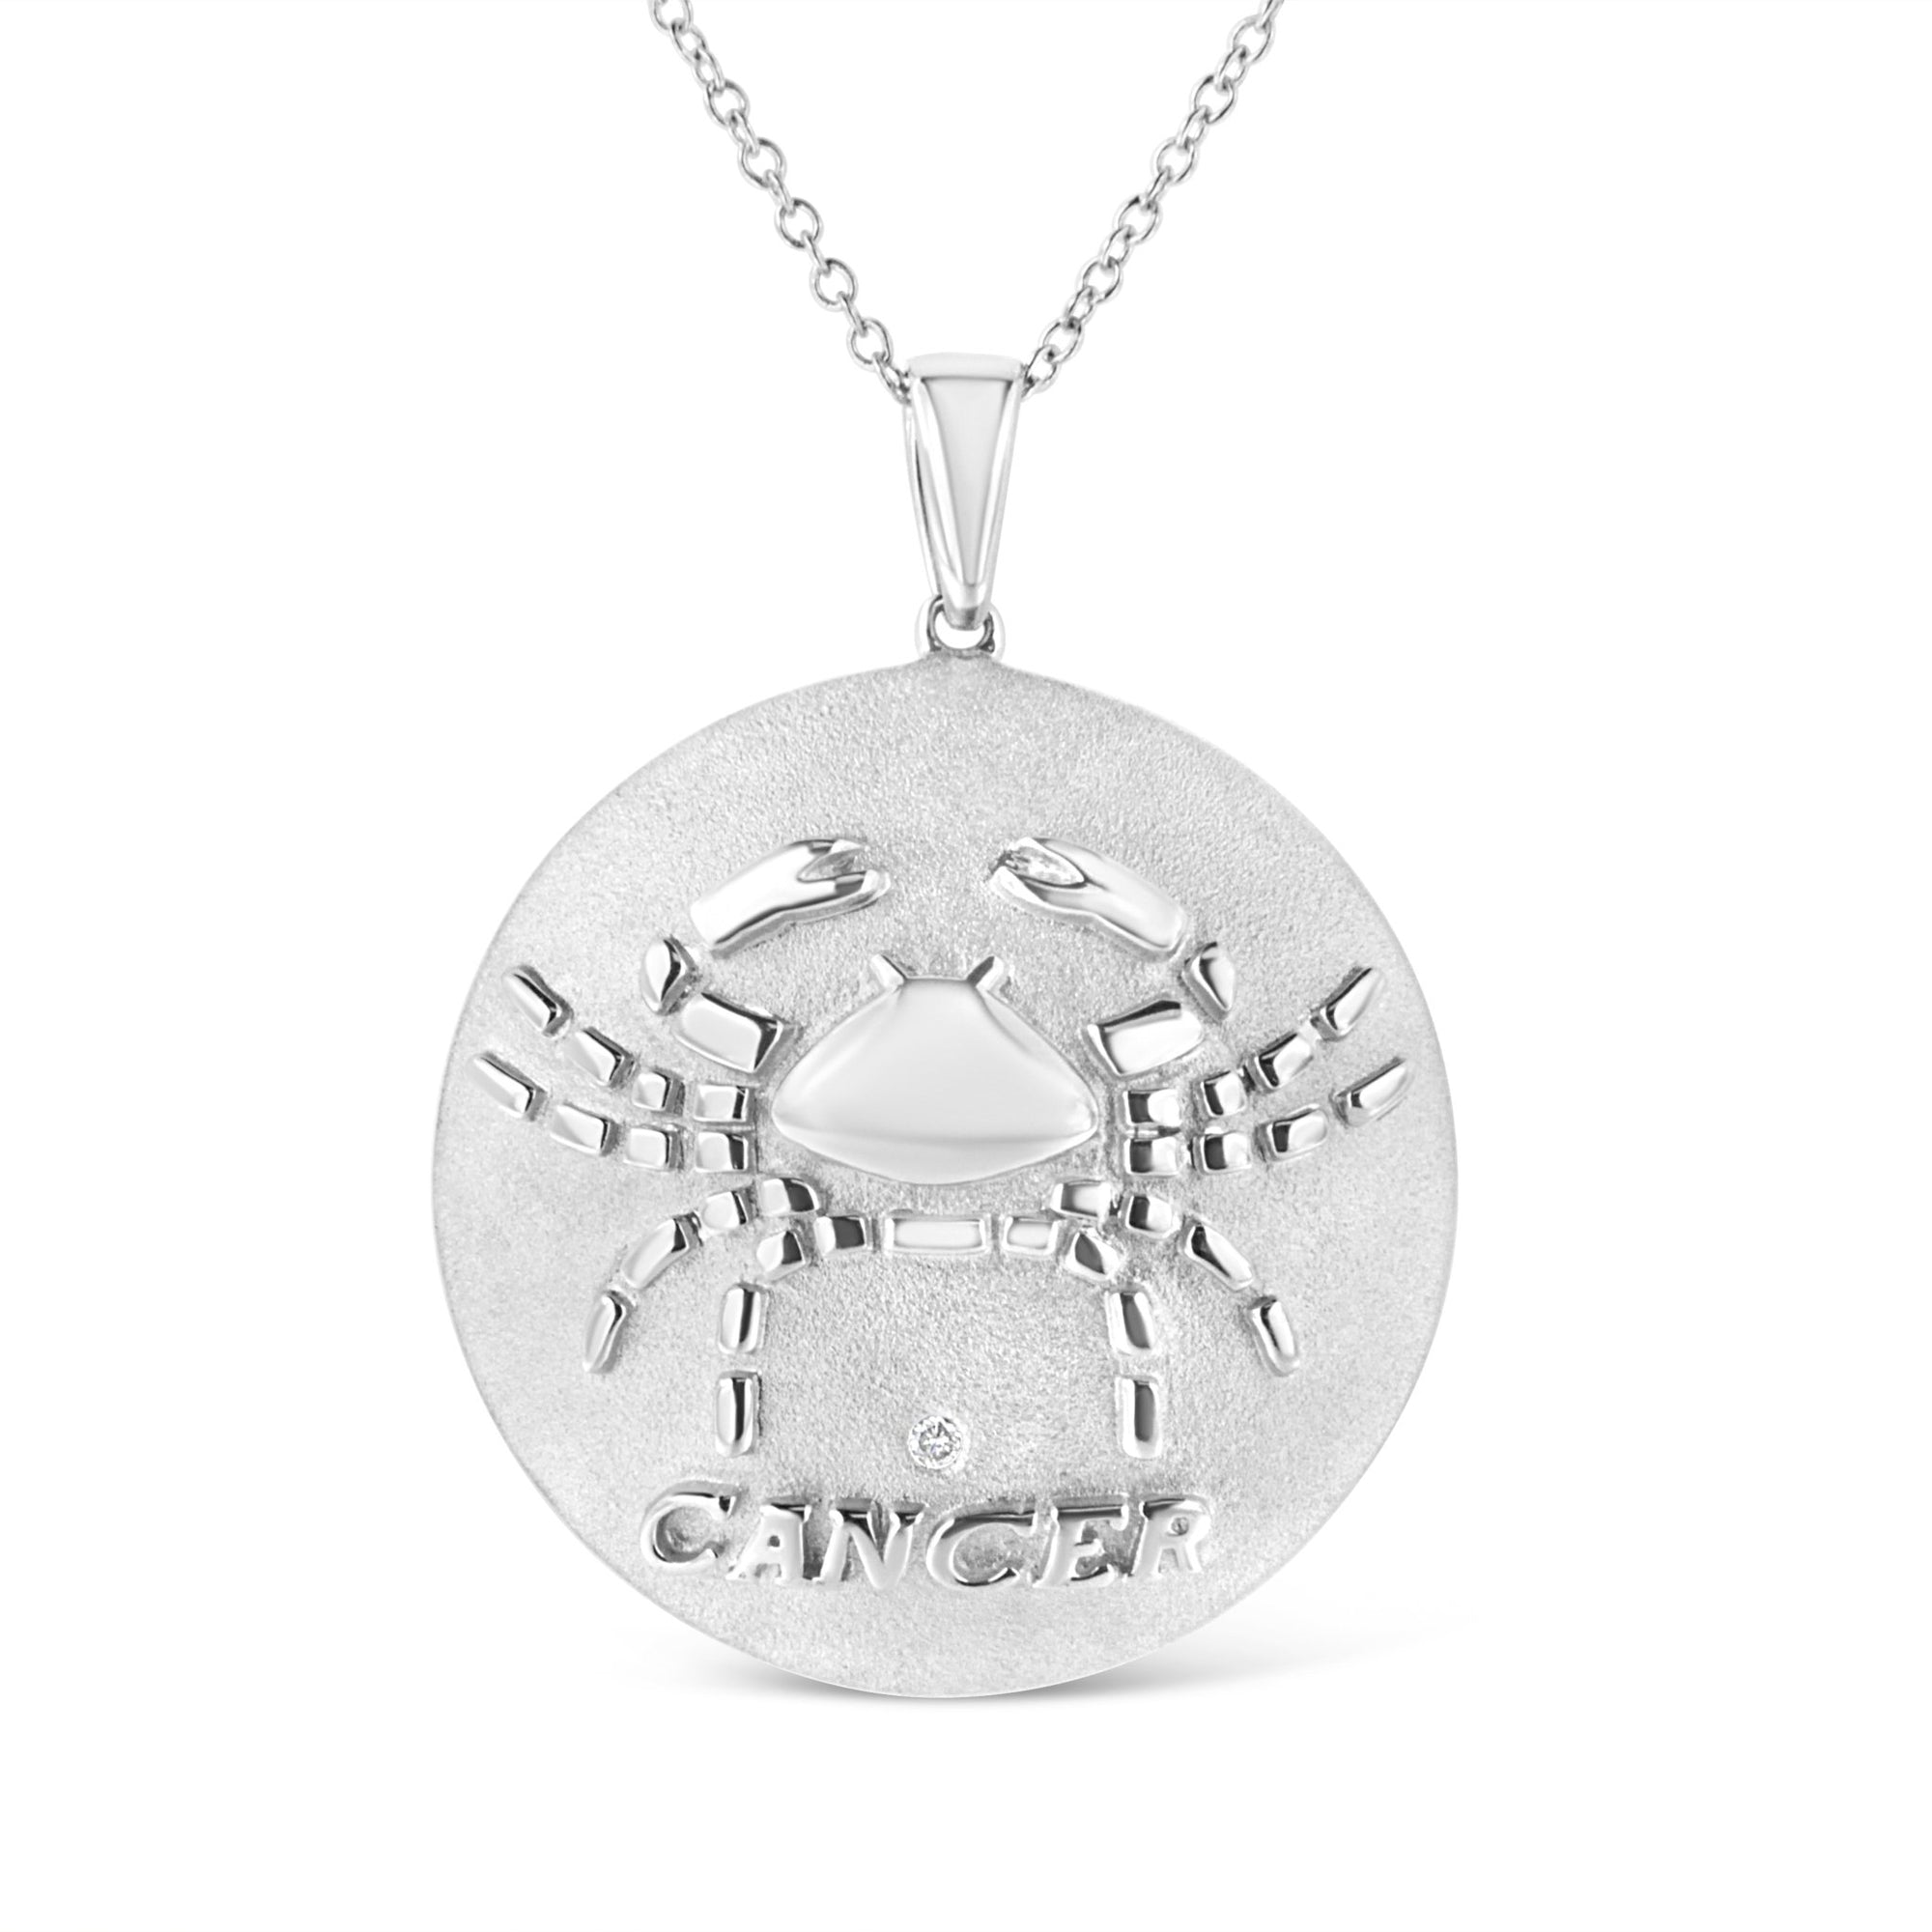 .925 Sterling Silver Diamond Accent Cancer Zodiac Design 18" Pendant Necklace Medallion (K-L Color, I1-I2 Clarity) - LinkagejewelrydesignLinkagejewelrydesign